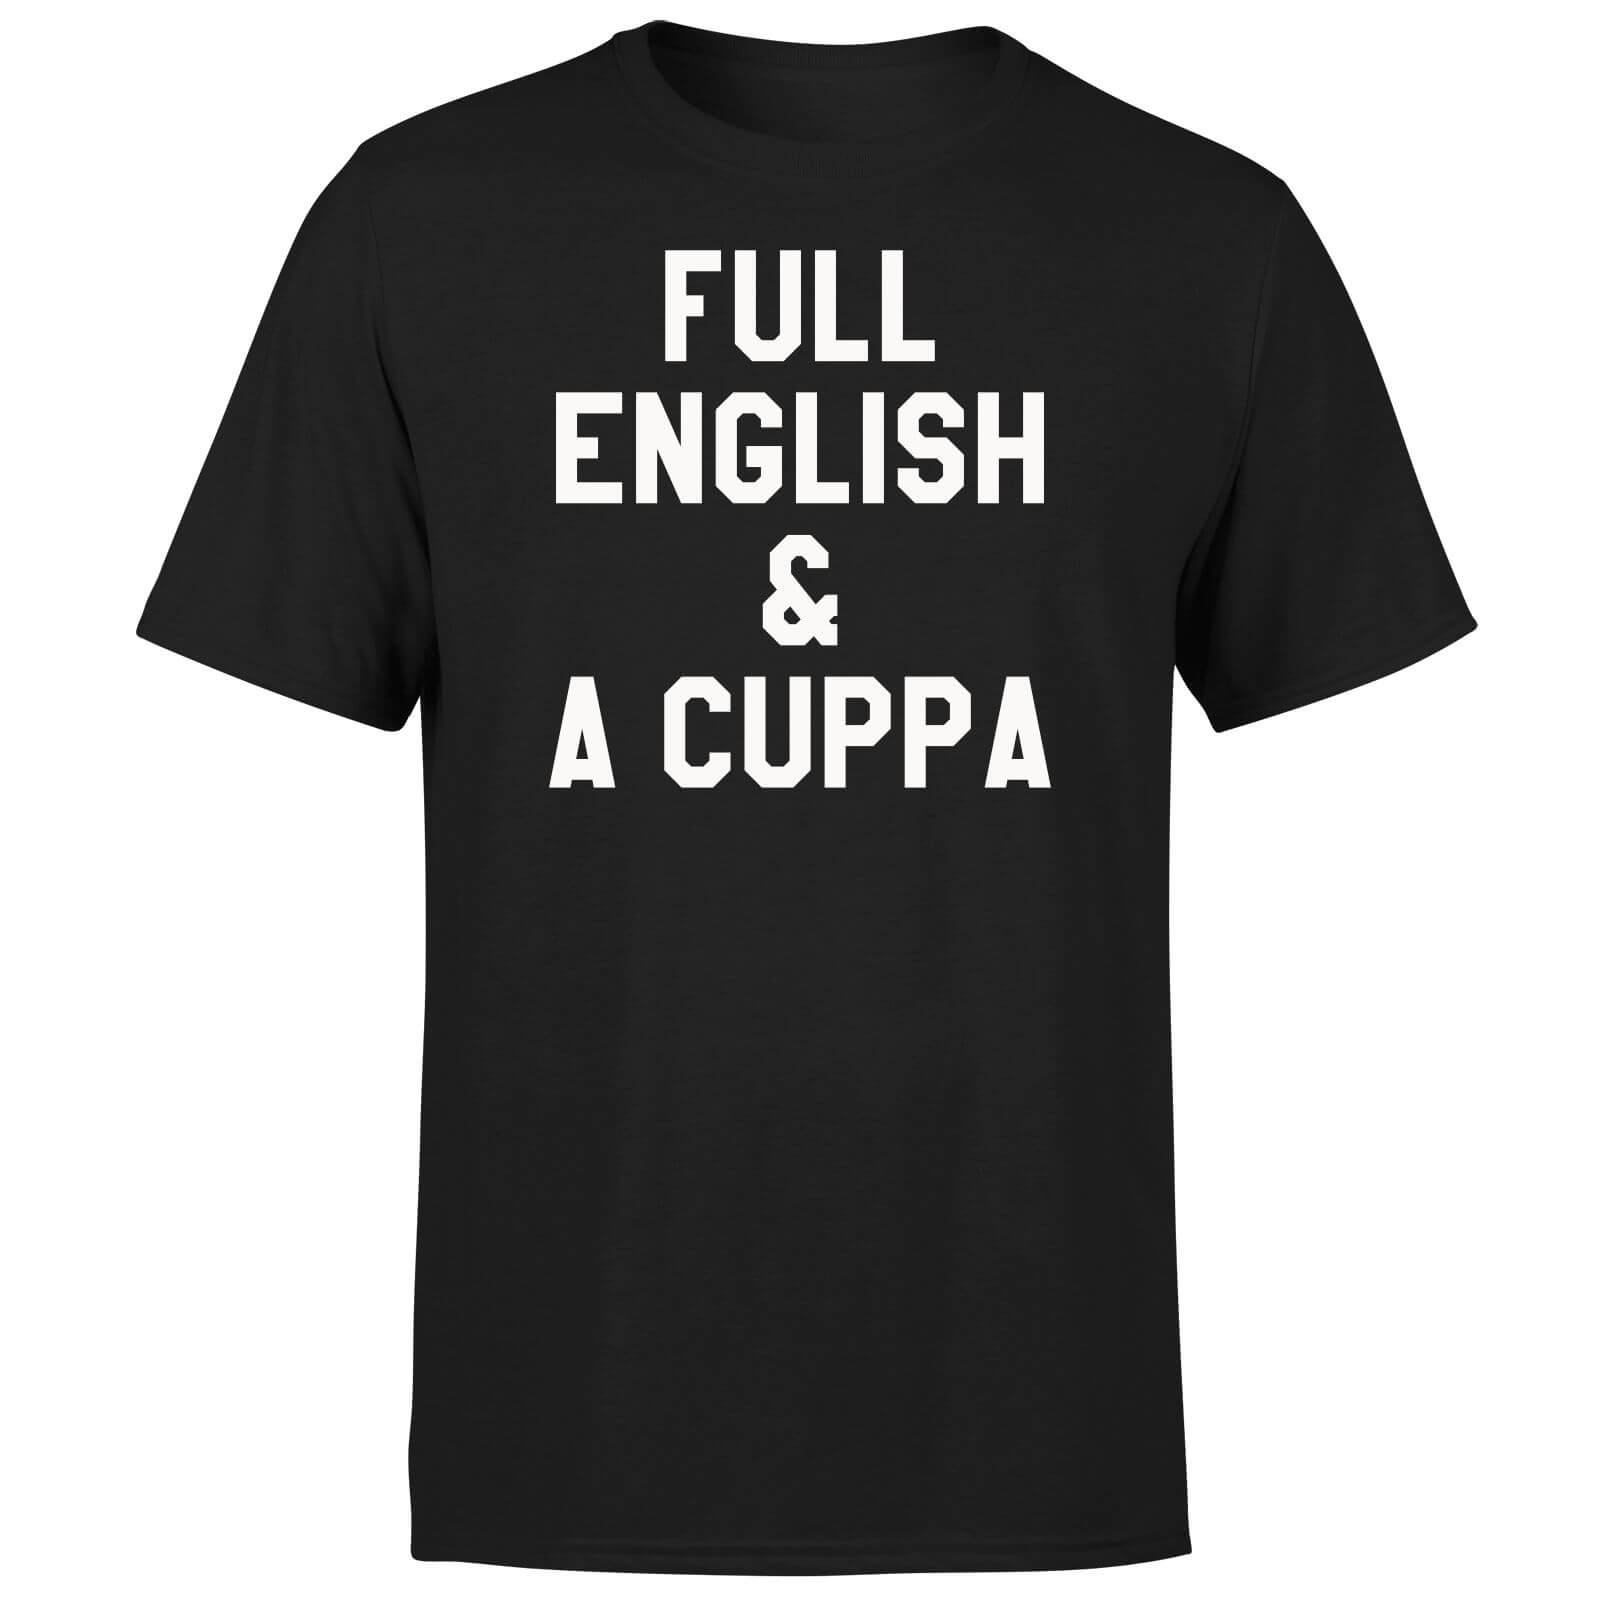 Full English and a Cuppa T-Shirt - Black - S - Black